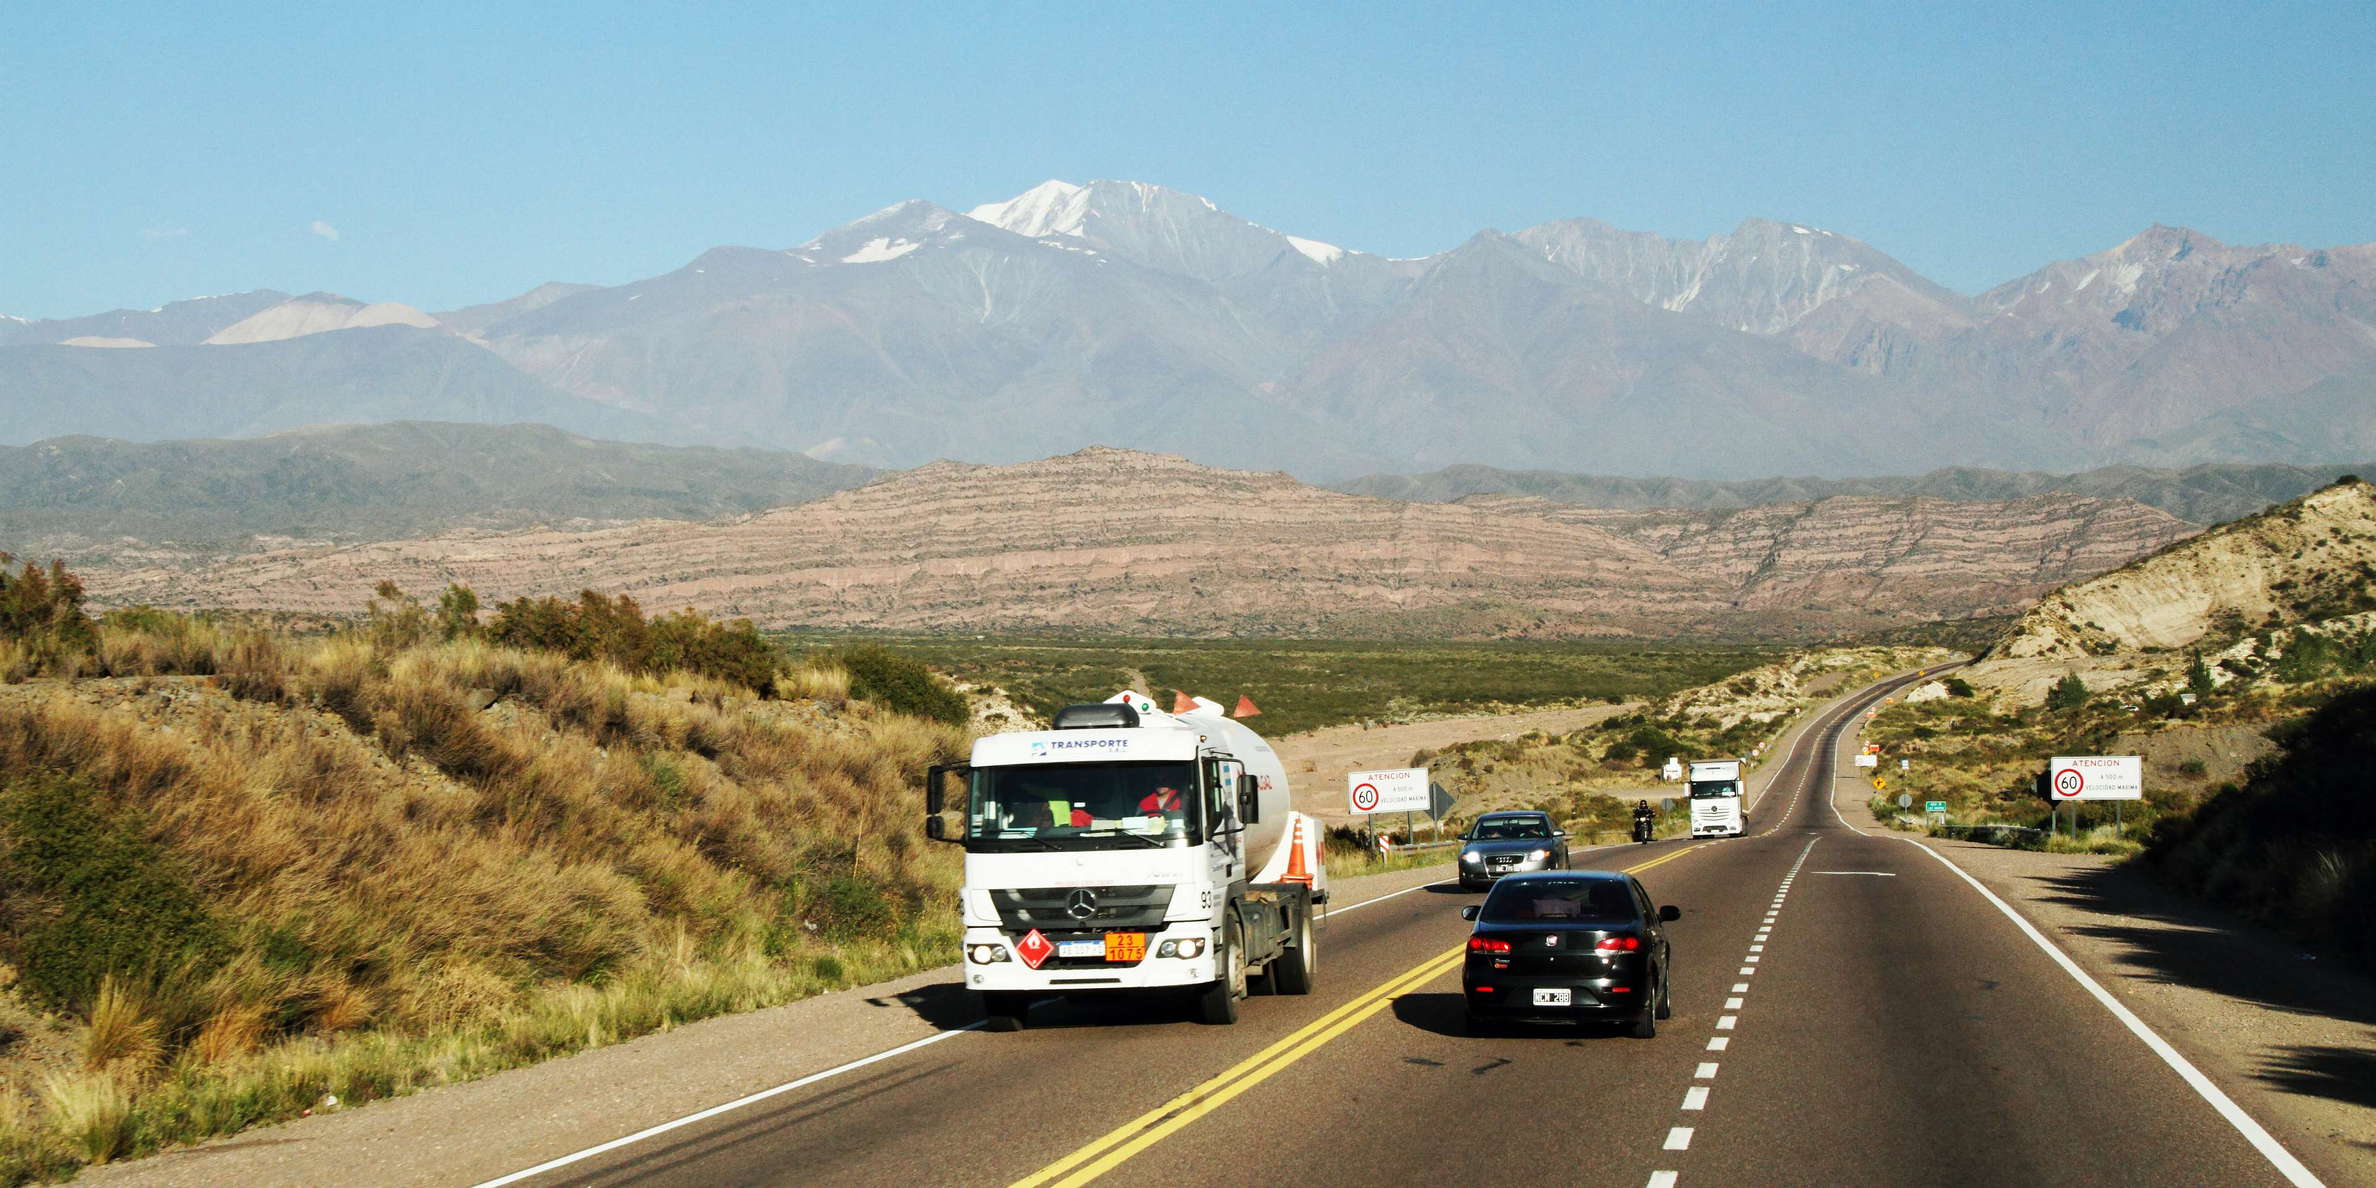 Mendoza | Ruta Nacional 7 with Cordillera Frontal